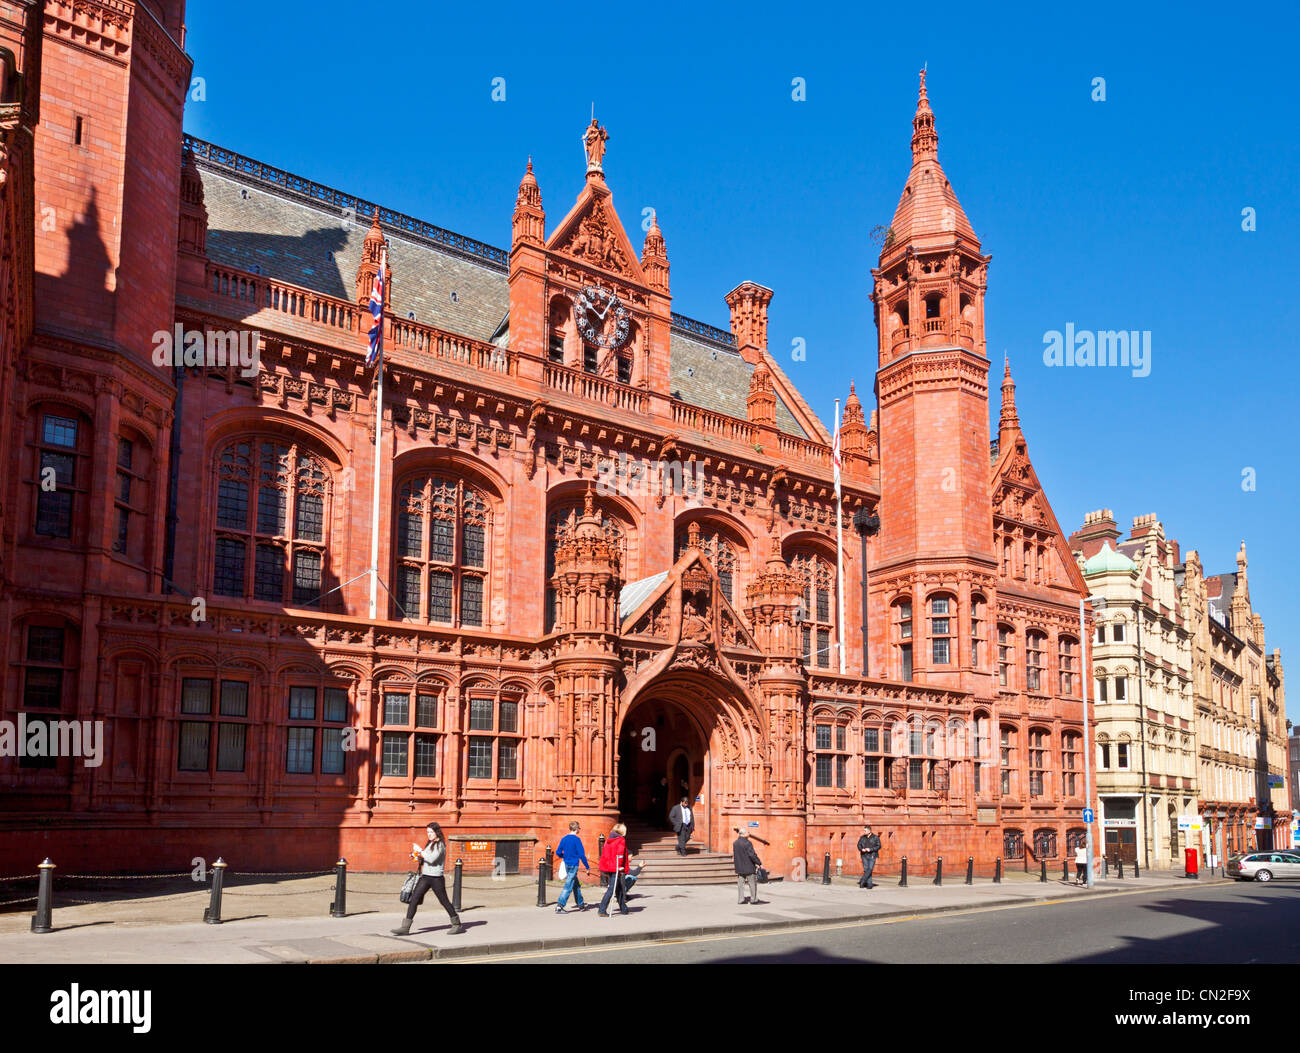 birmingham magistrates court Birmingham West midlands England UK GB EU europe Stock Photo